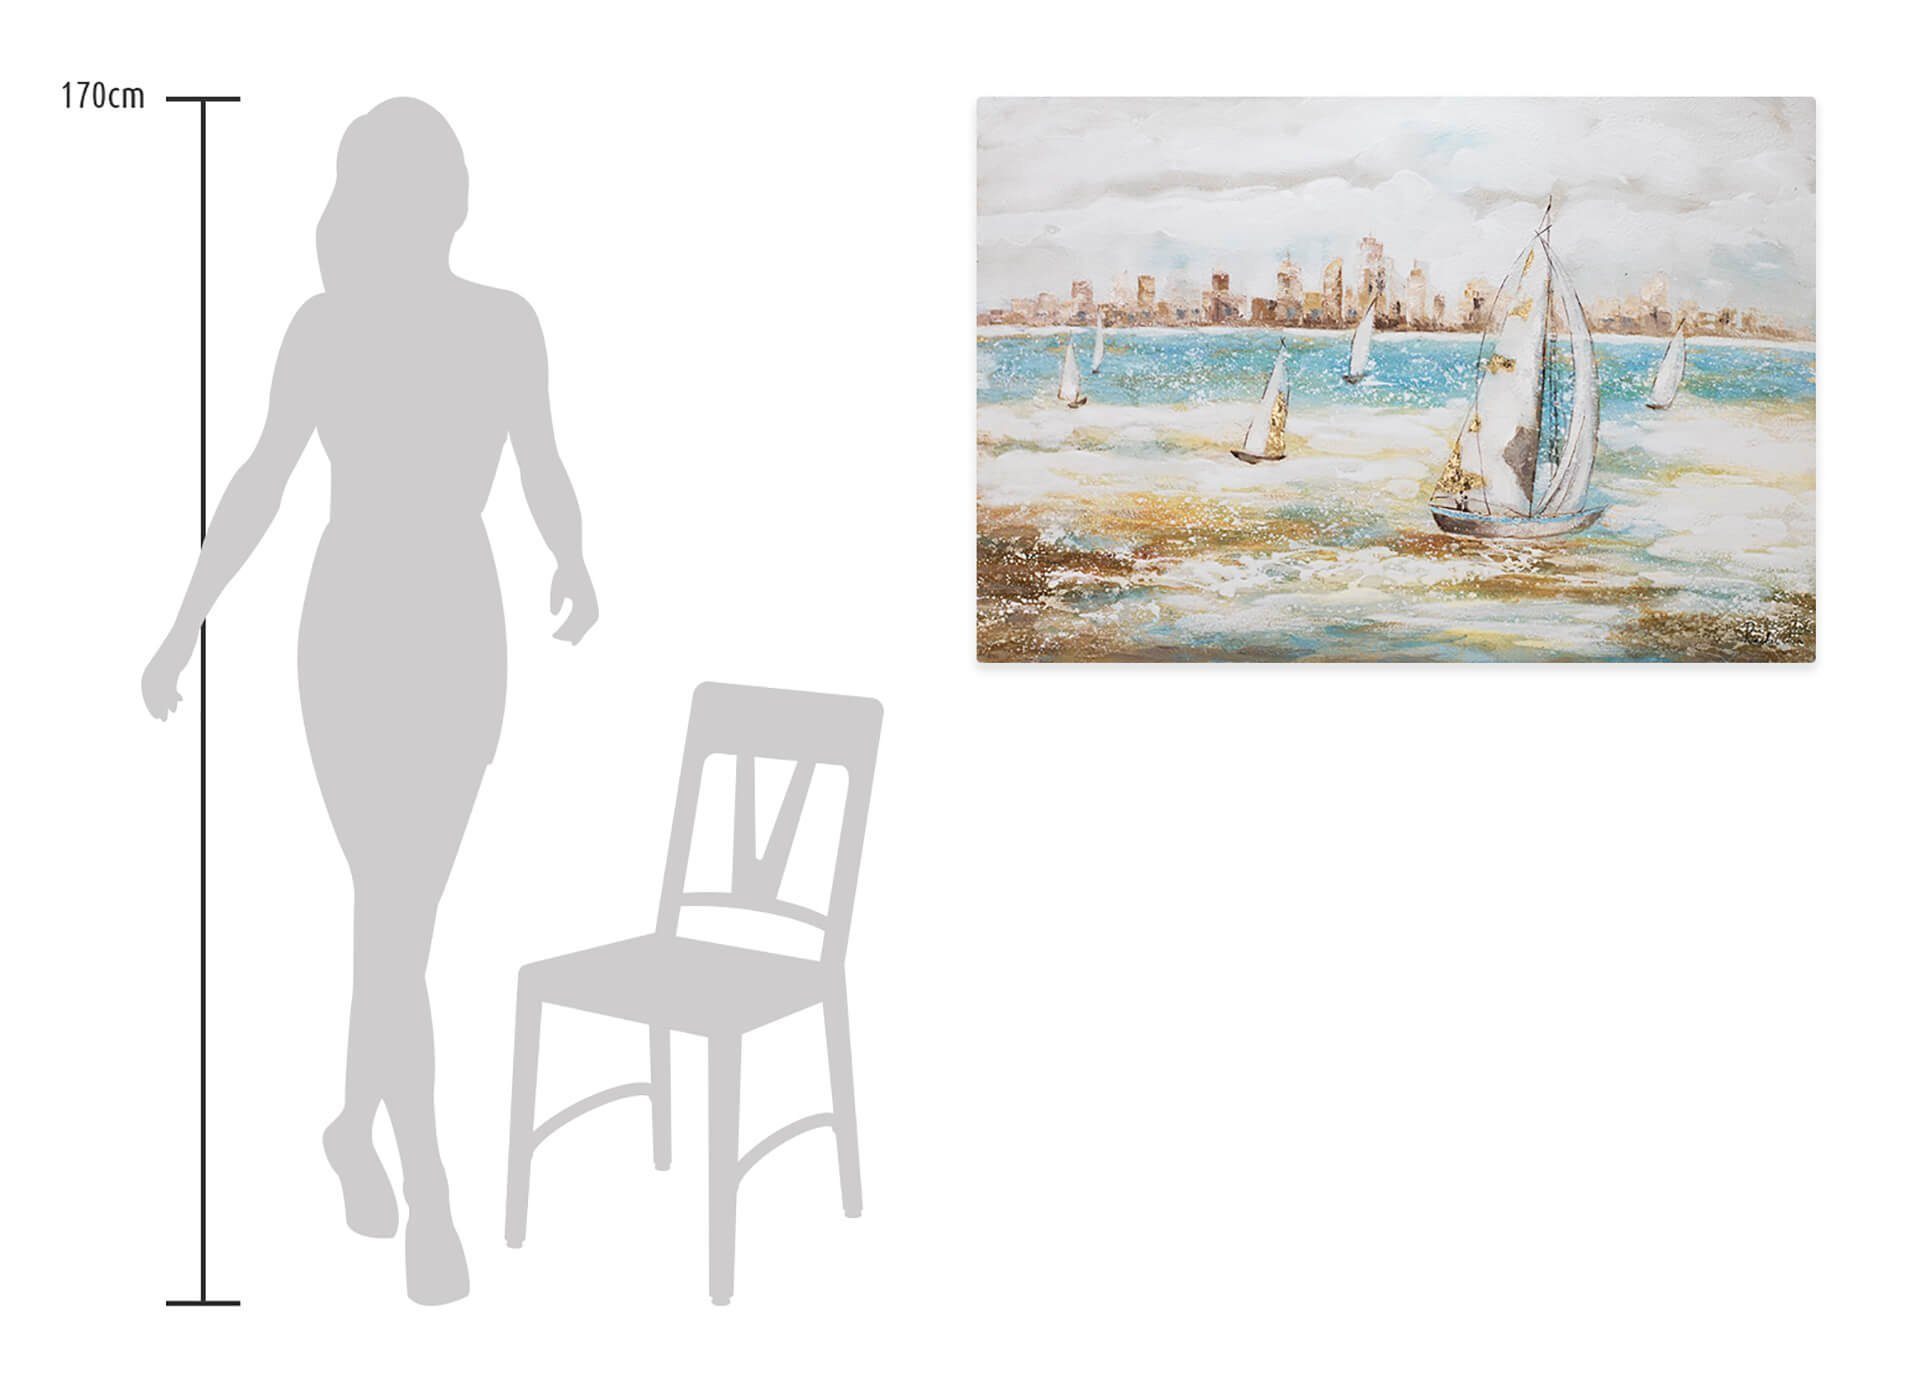 Leinwandbild 120x80 Sailor's Wohnzimmer Race Gemälde Wandbild cm, KUNSTLOFT 100% HANDGEMALT